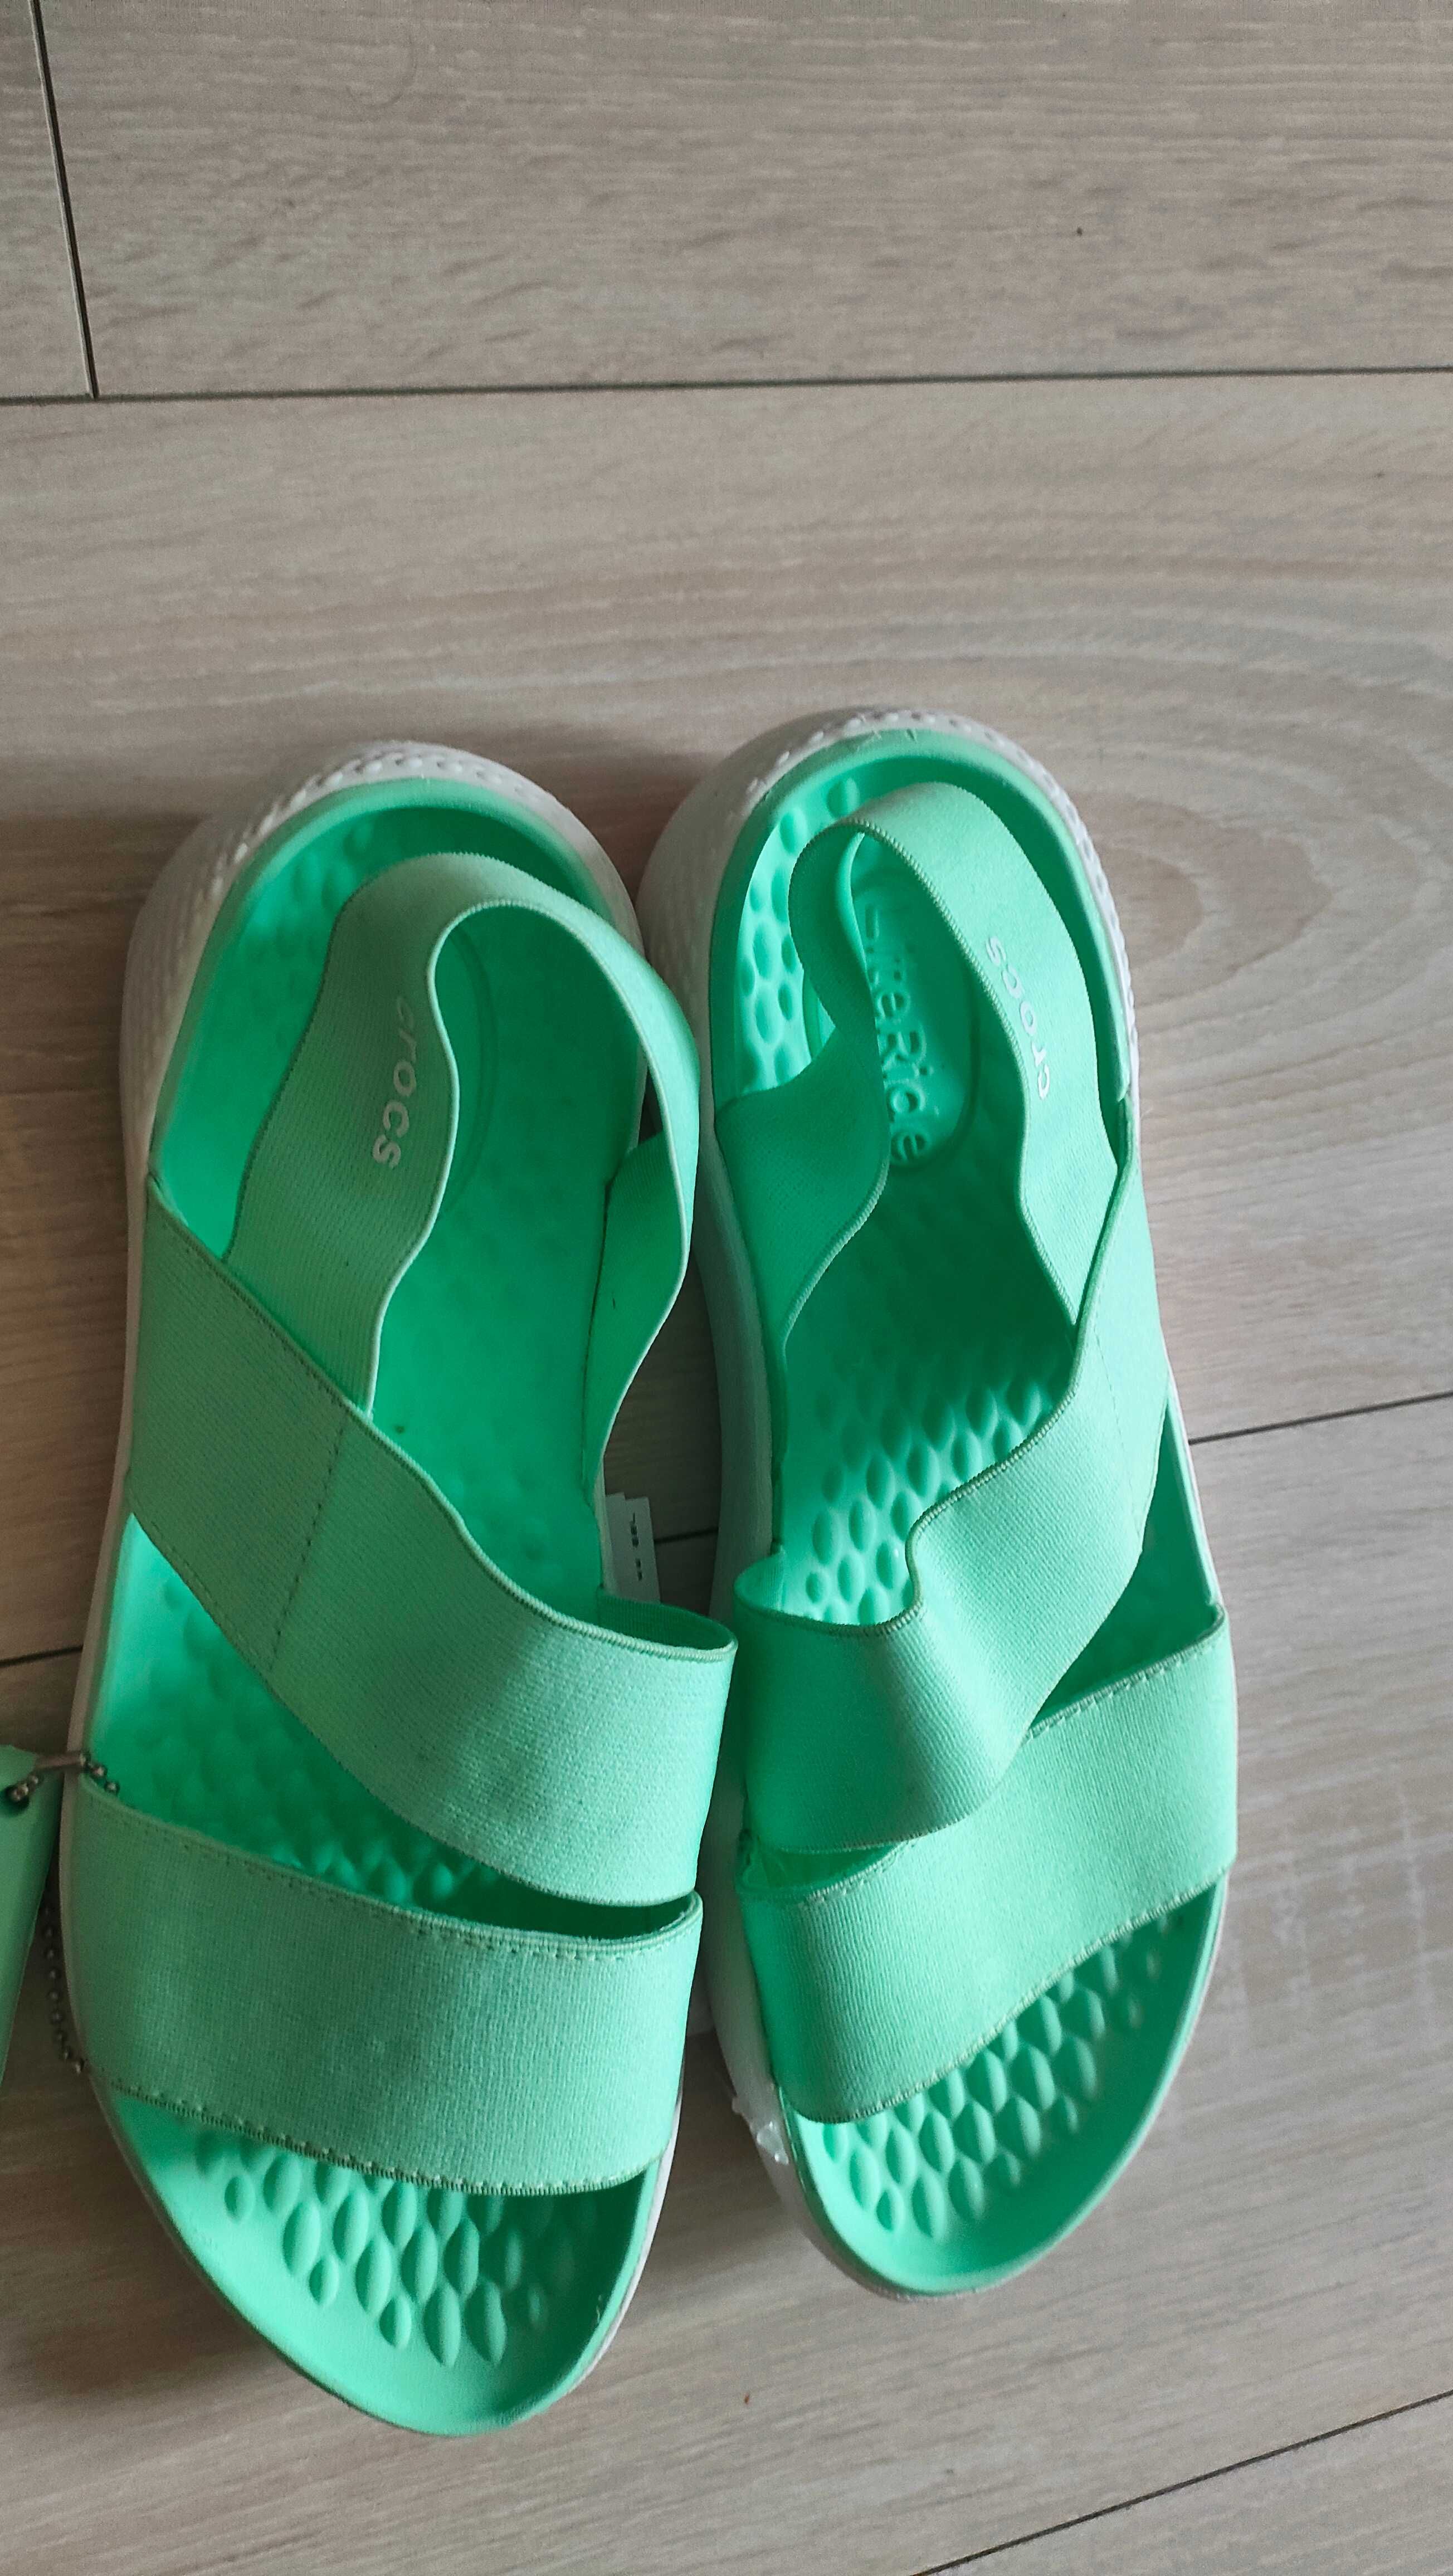 Crocs LiteRide Stretch sandals